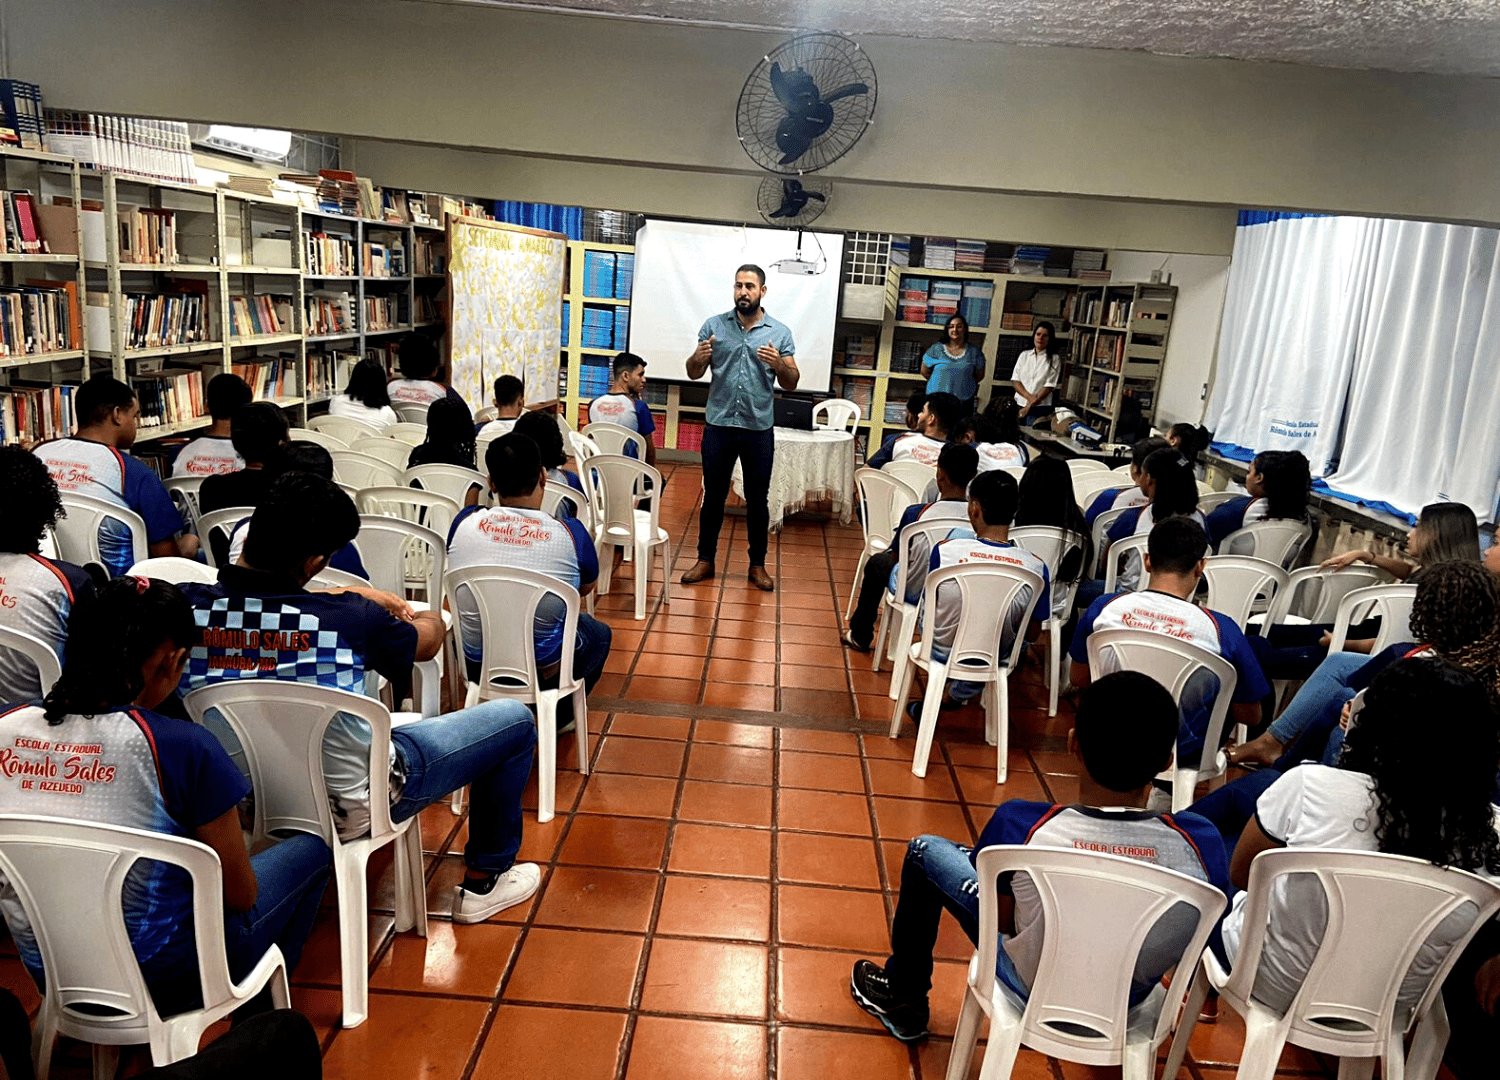 You are currently viewing Funorte janaúba leva conhecimento aos estudantes da escola Estadual Rômulo Sales